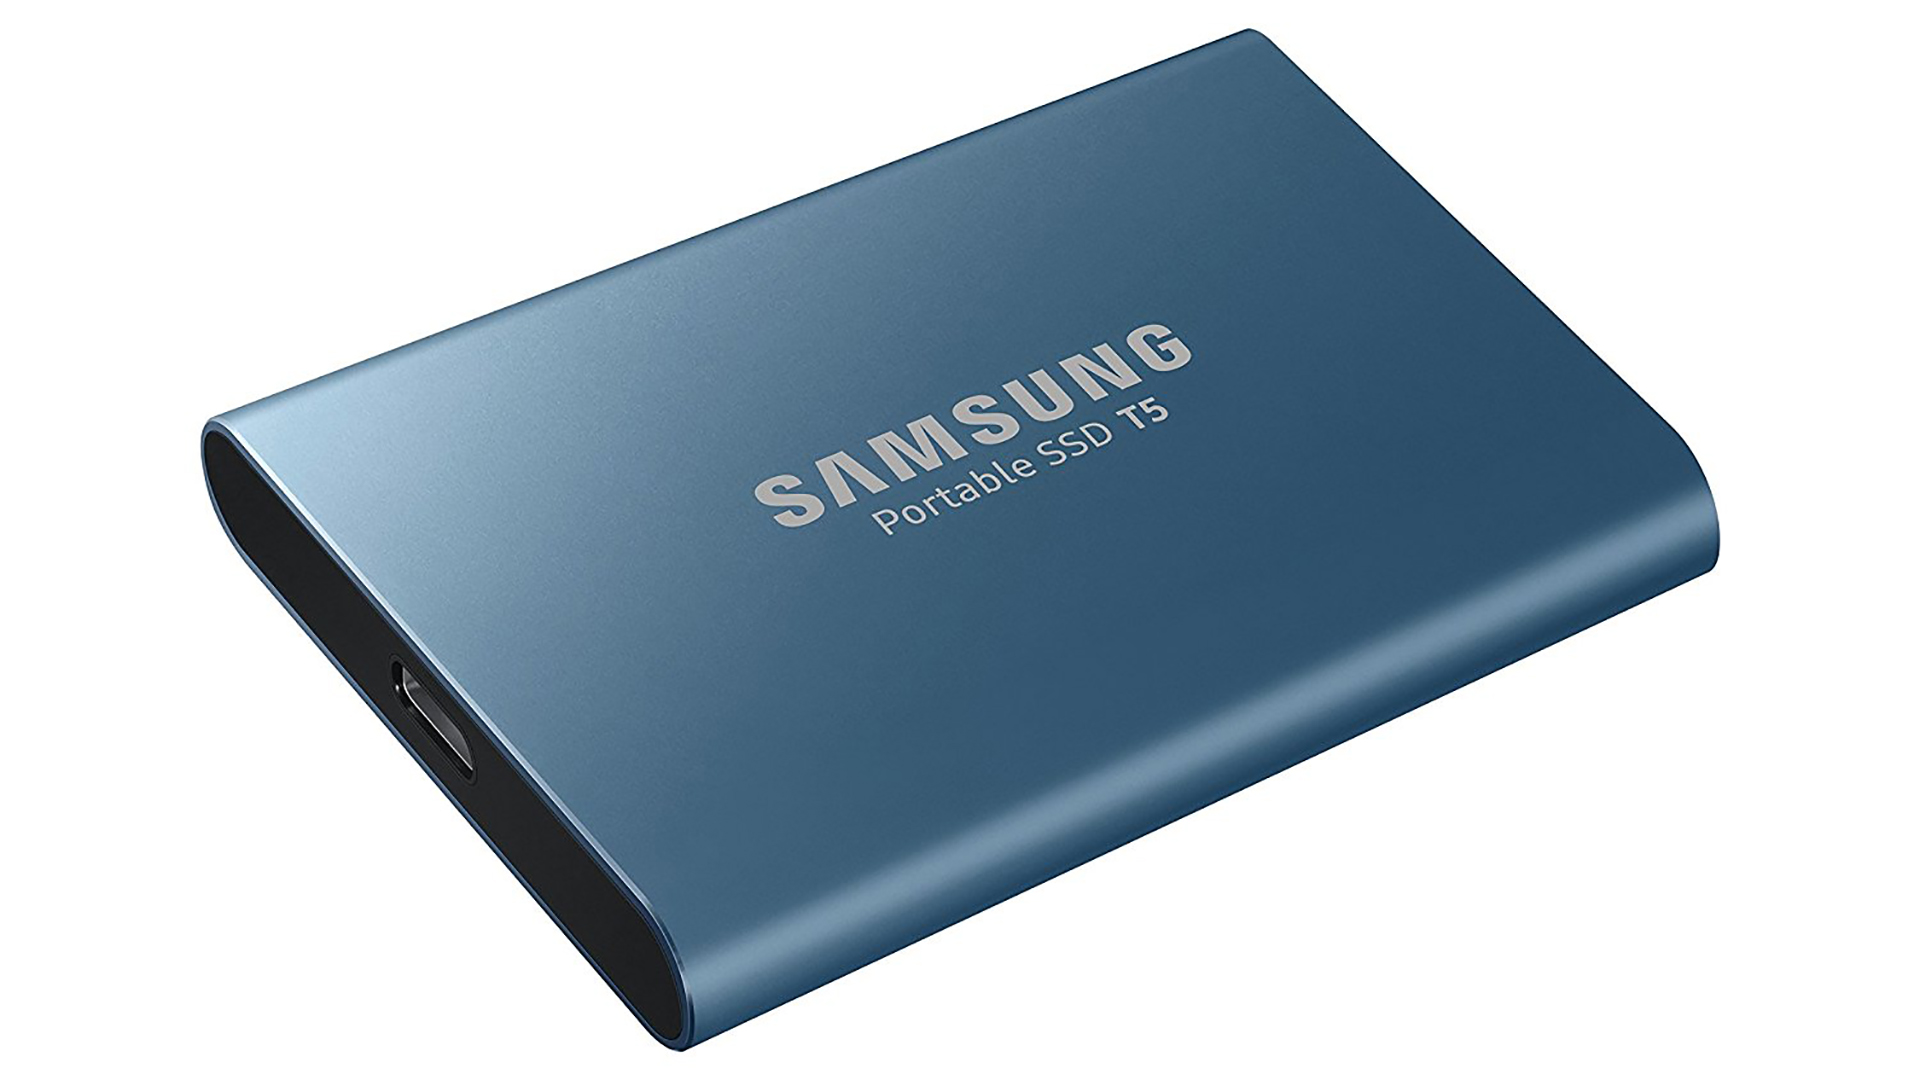 Samsungi T5 SSD